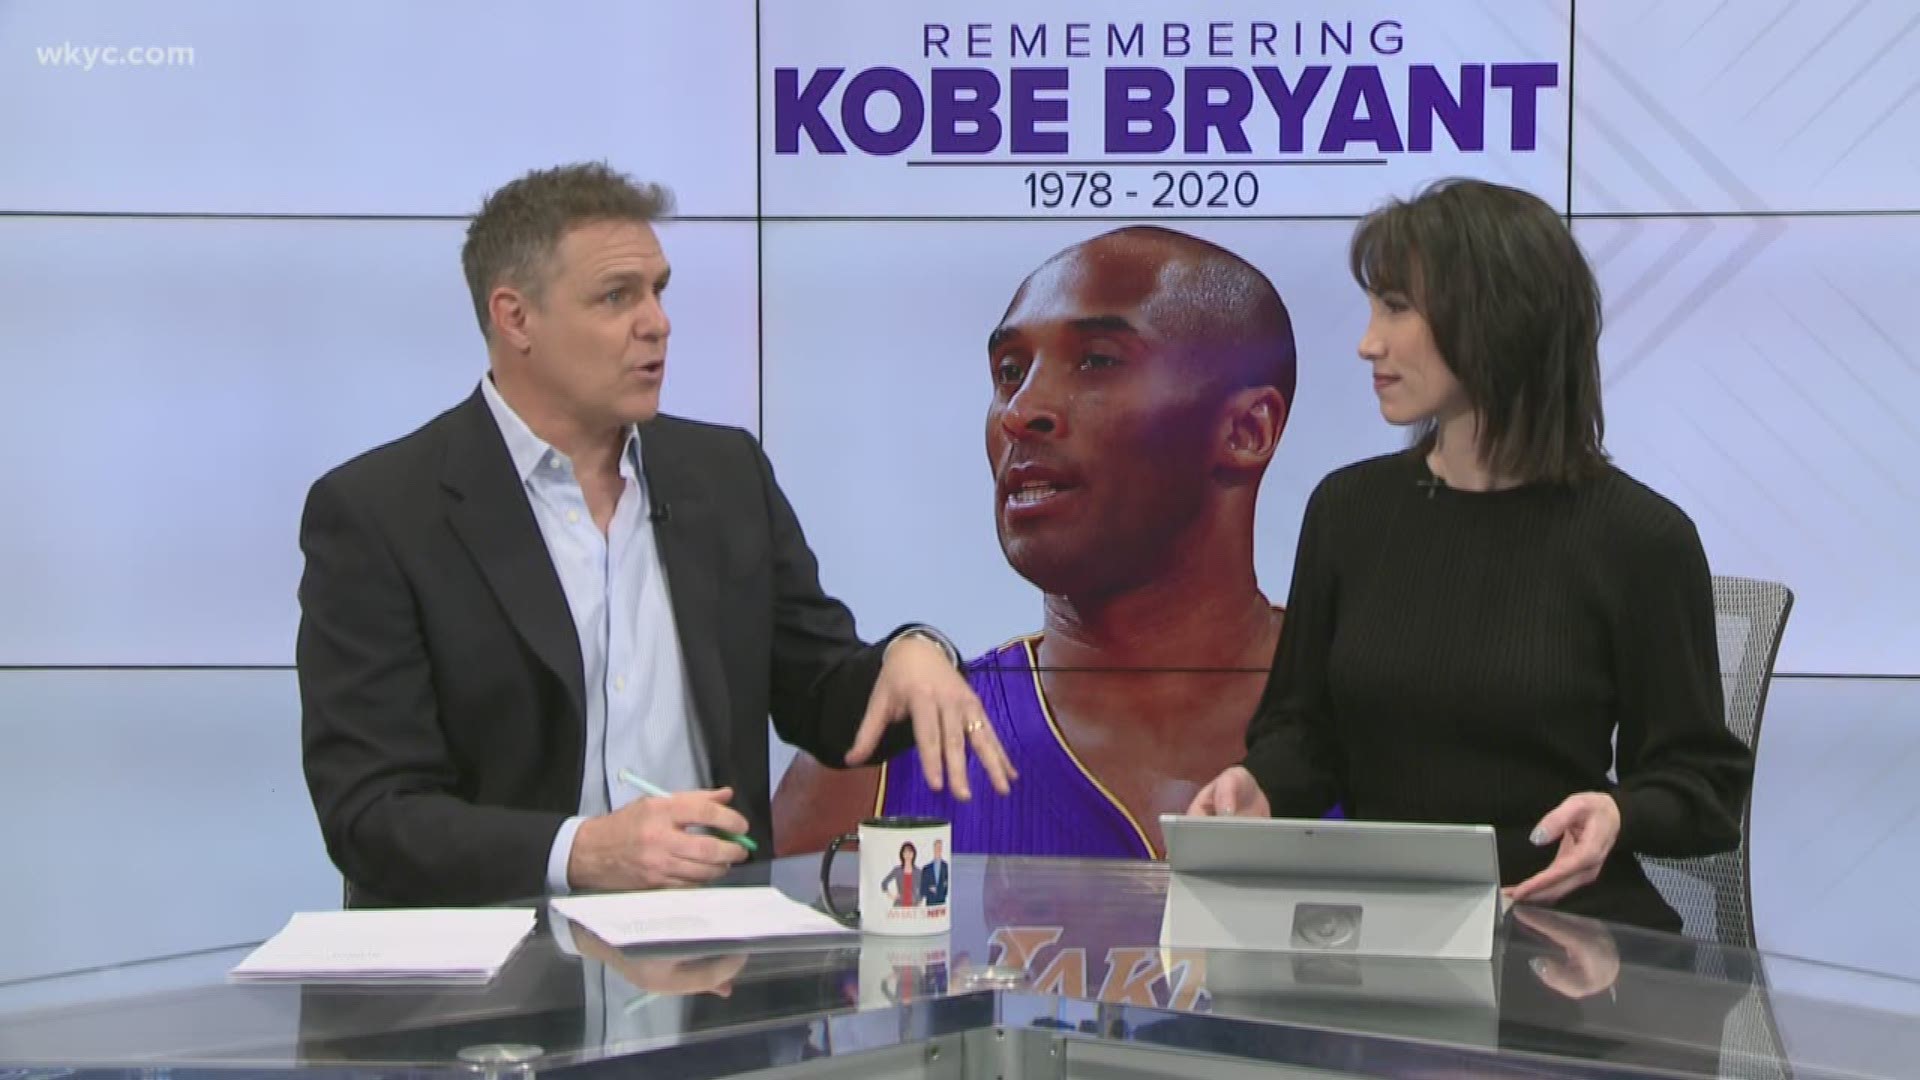 NBA: Clock ticking even faster for Kobe Bryant - ESPN